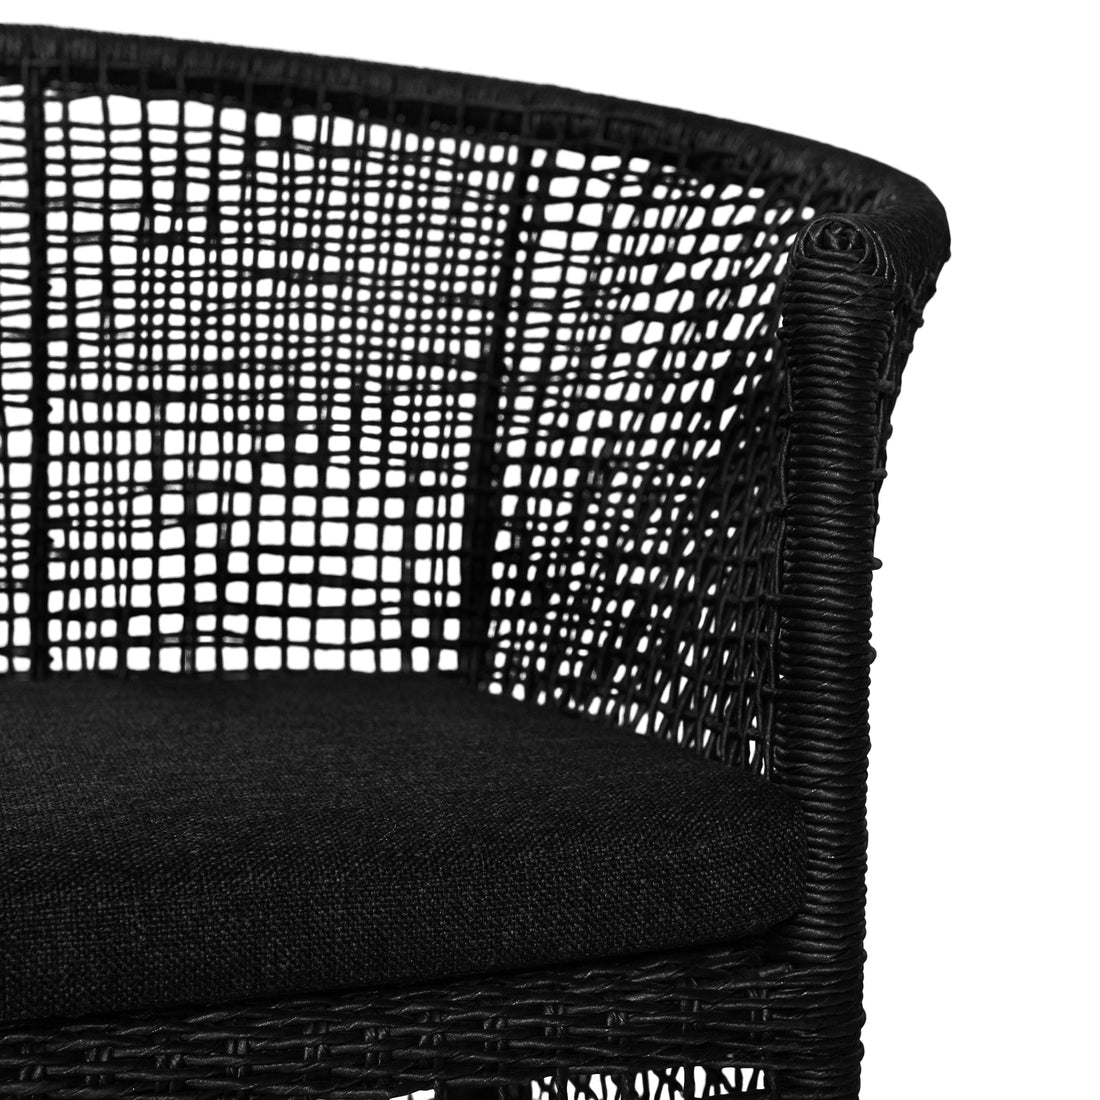 Sanctuary Dining Chair | Black